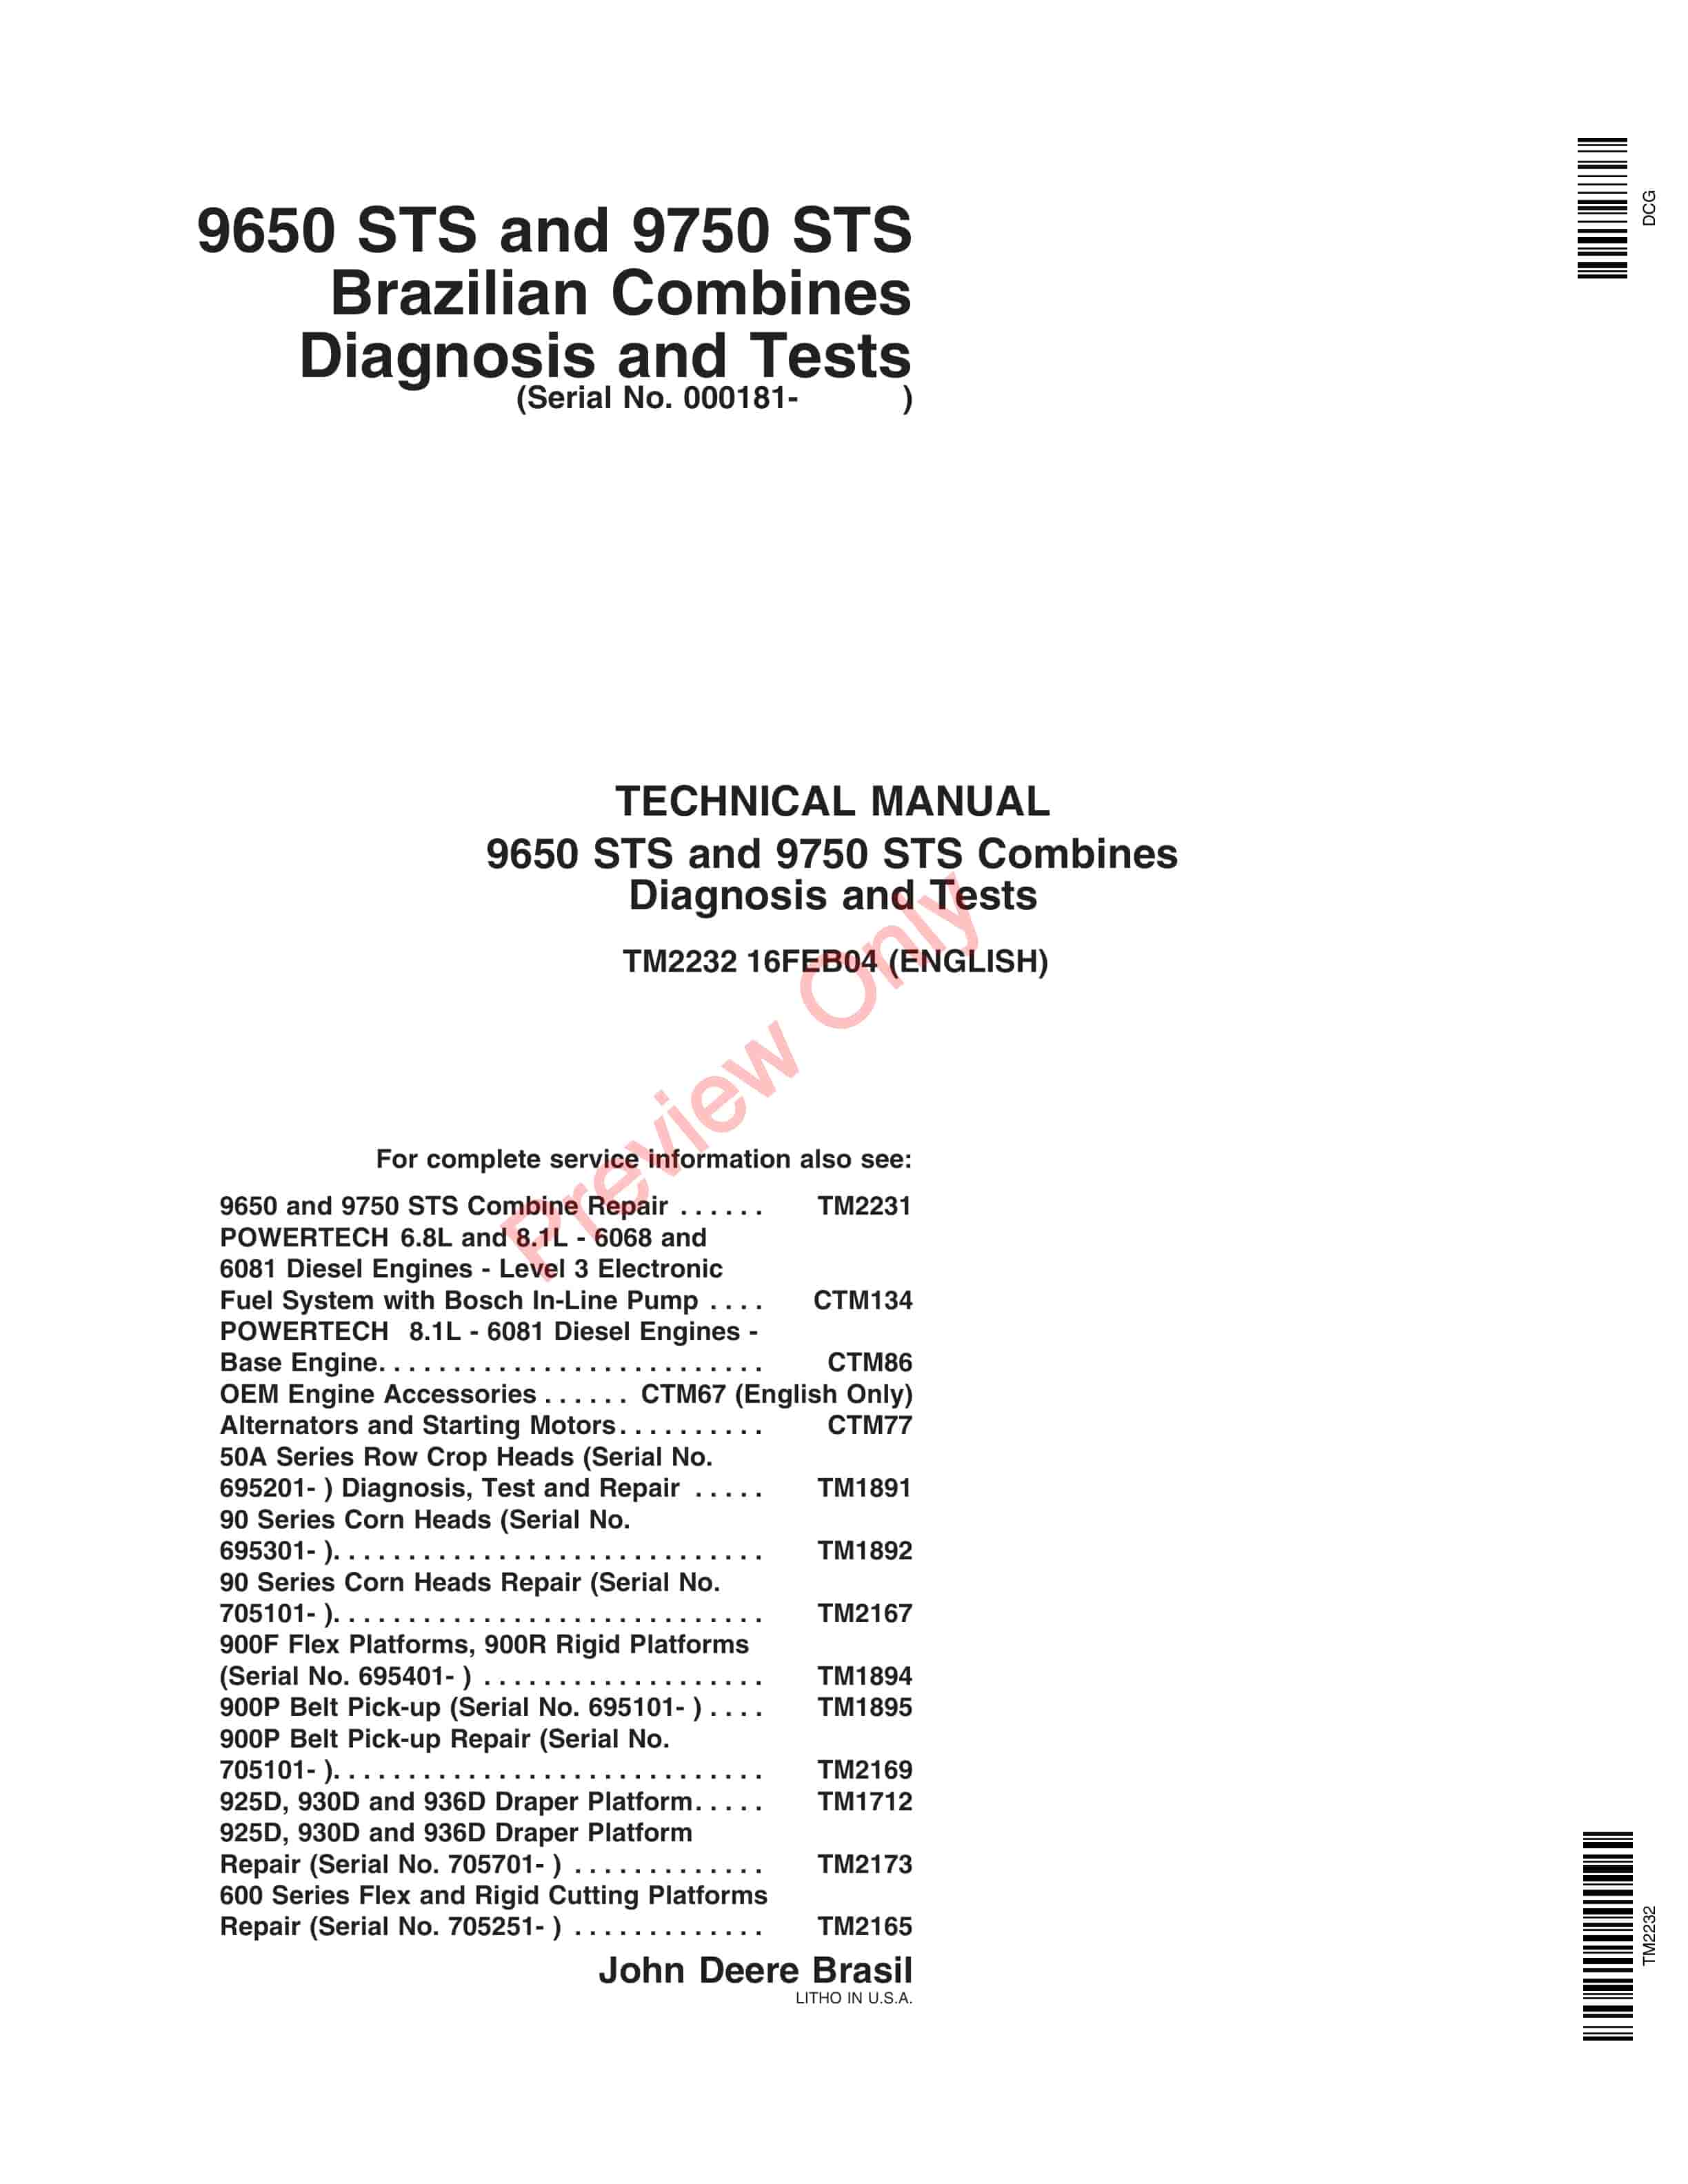 John Deere 9650 STS 9750 STS Brazilian Combines Technical Manual TM2232 16FEB04 1